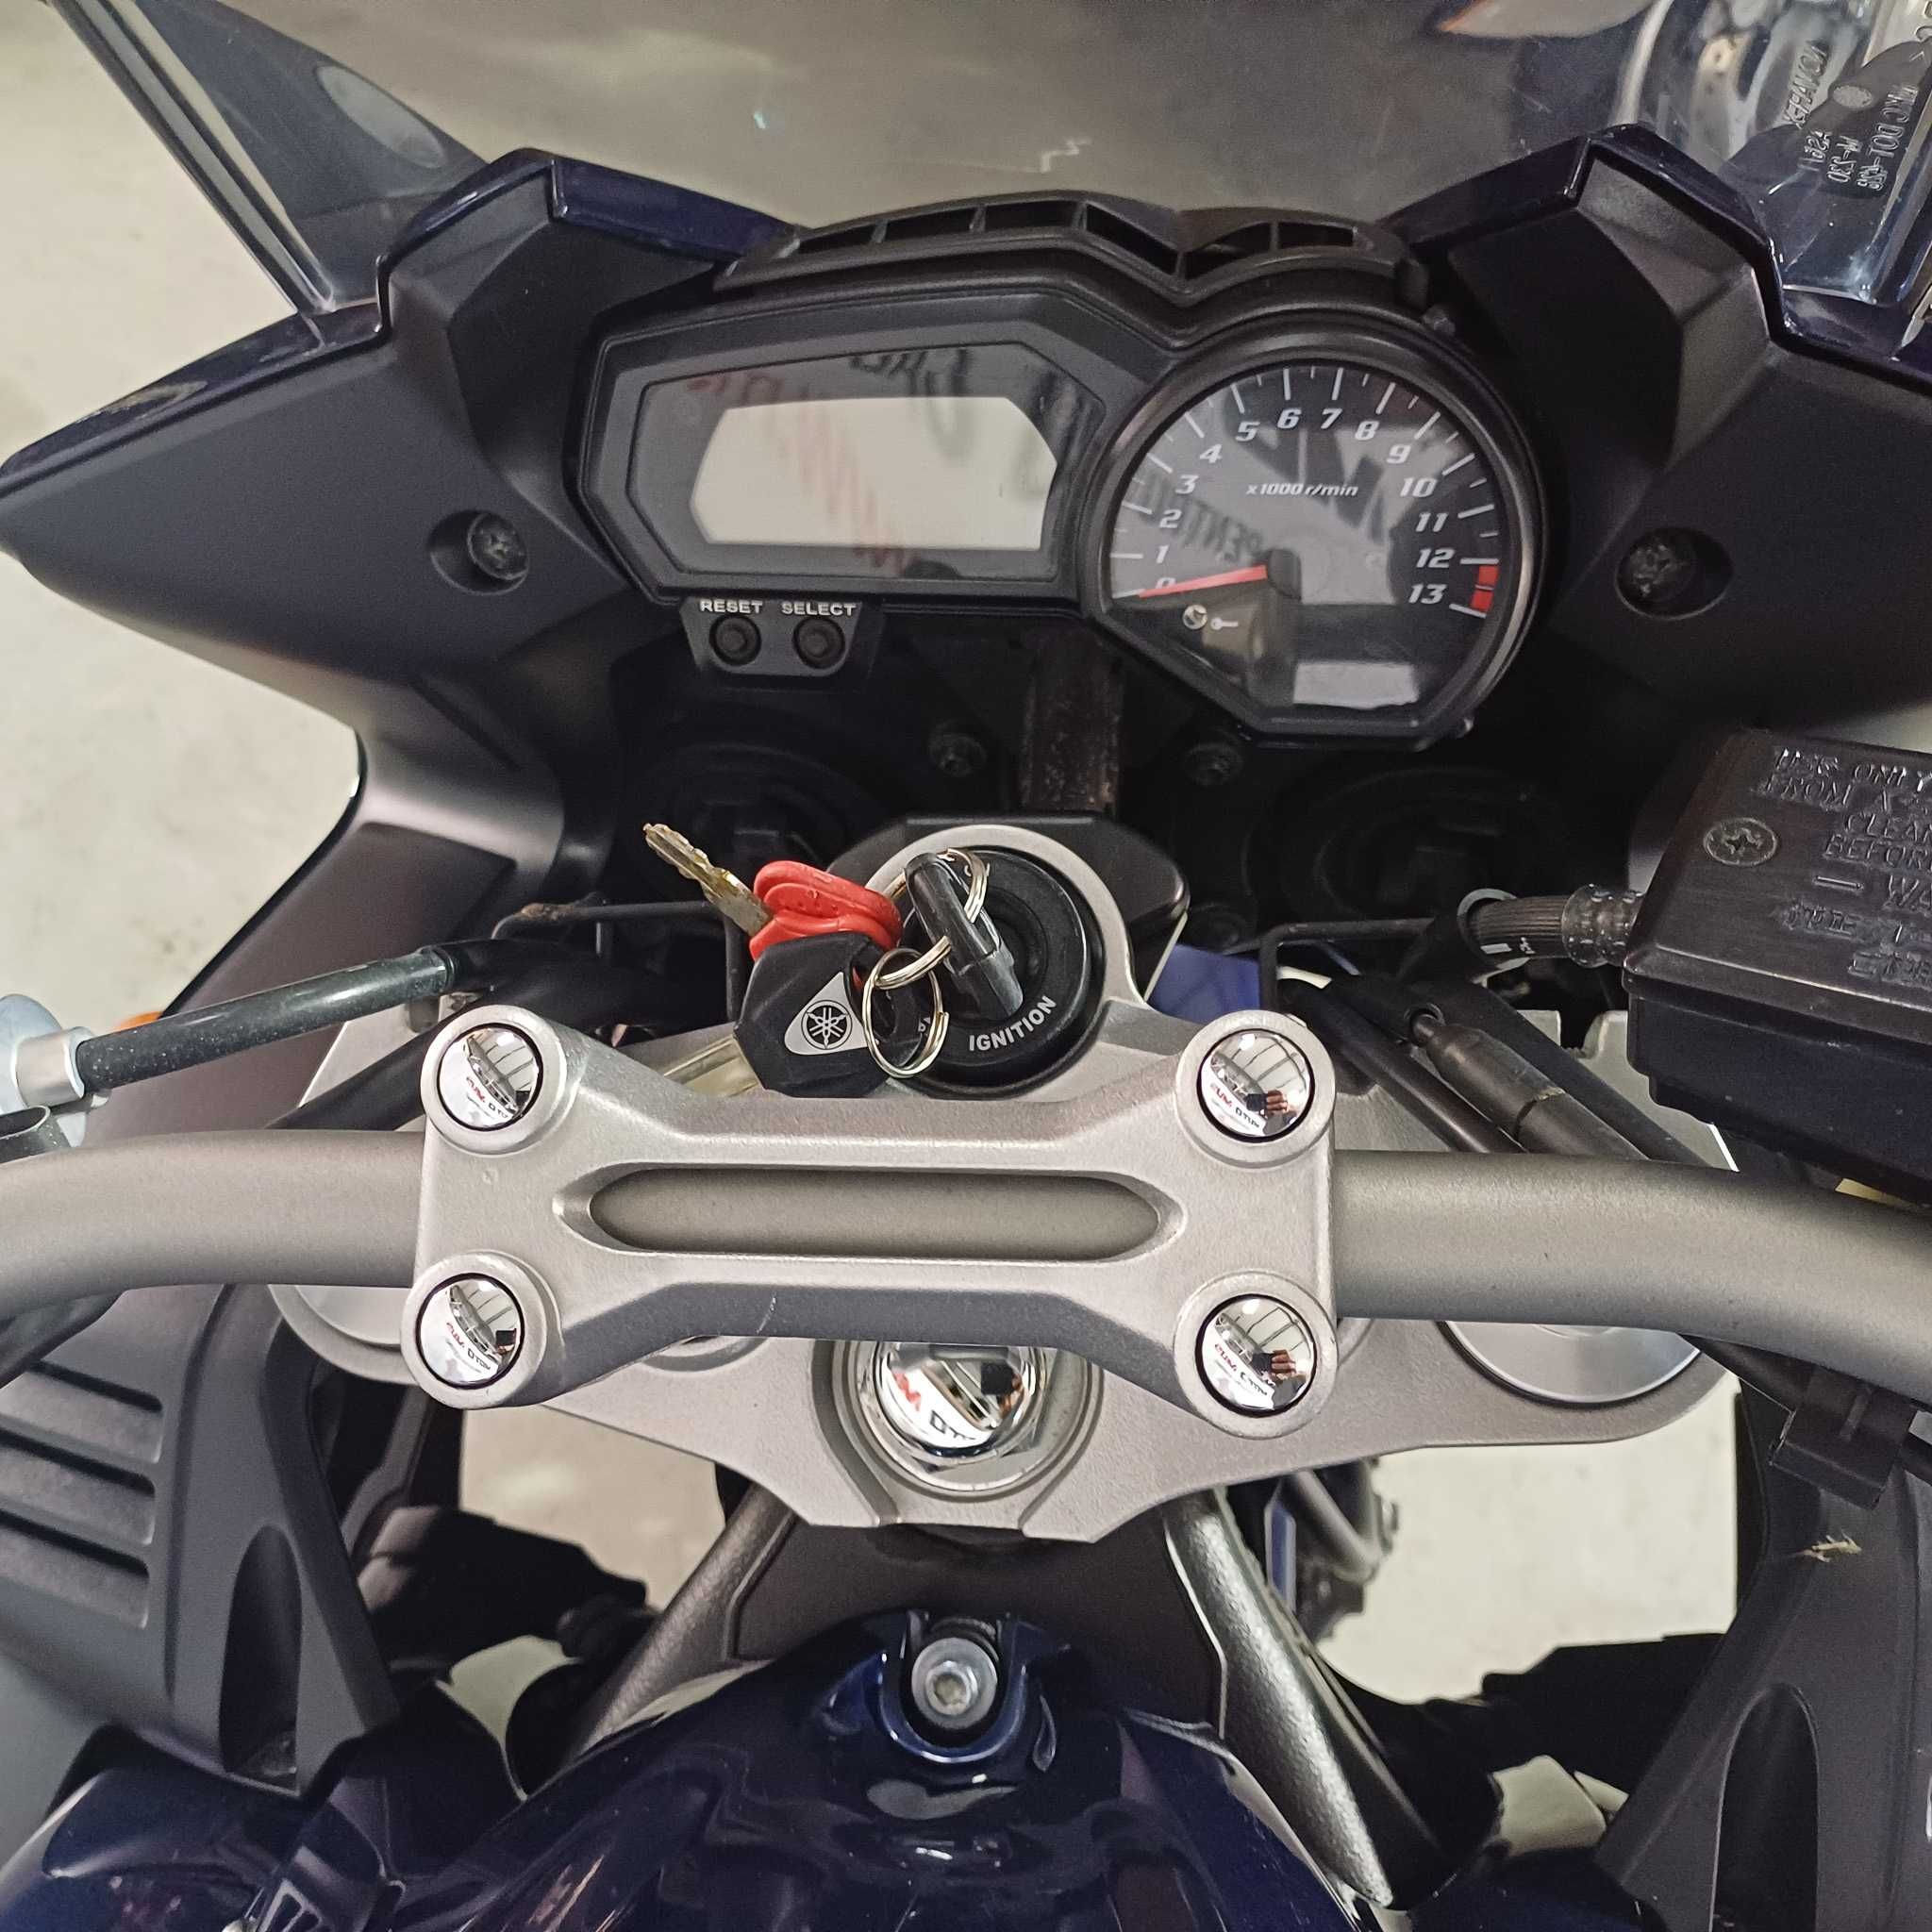 Motocicleta Yamaha FZ1 Fazer | Y09867 | motomus.ro